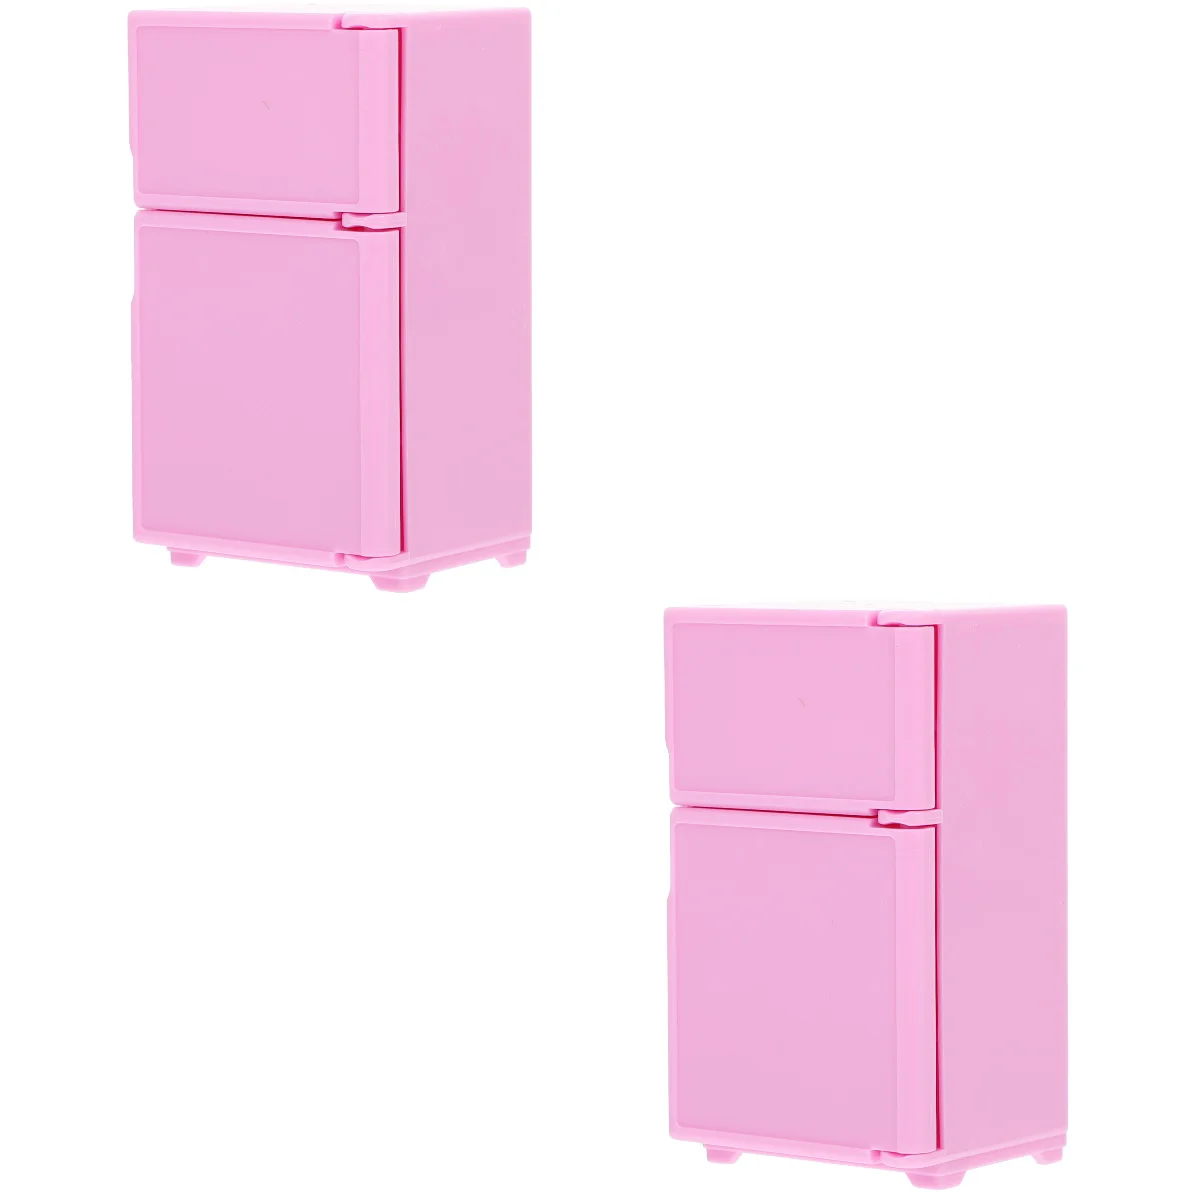 

Mini Fridge House Kictken Supply Refrigerator Decorations Plastic Model Furniture Tiny Delicate Decorative